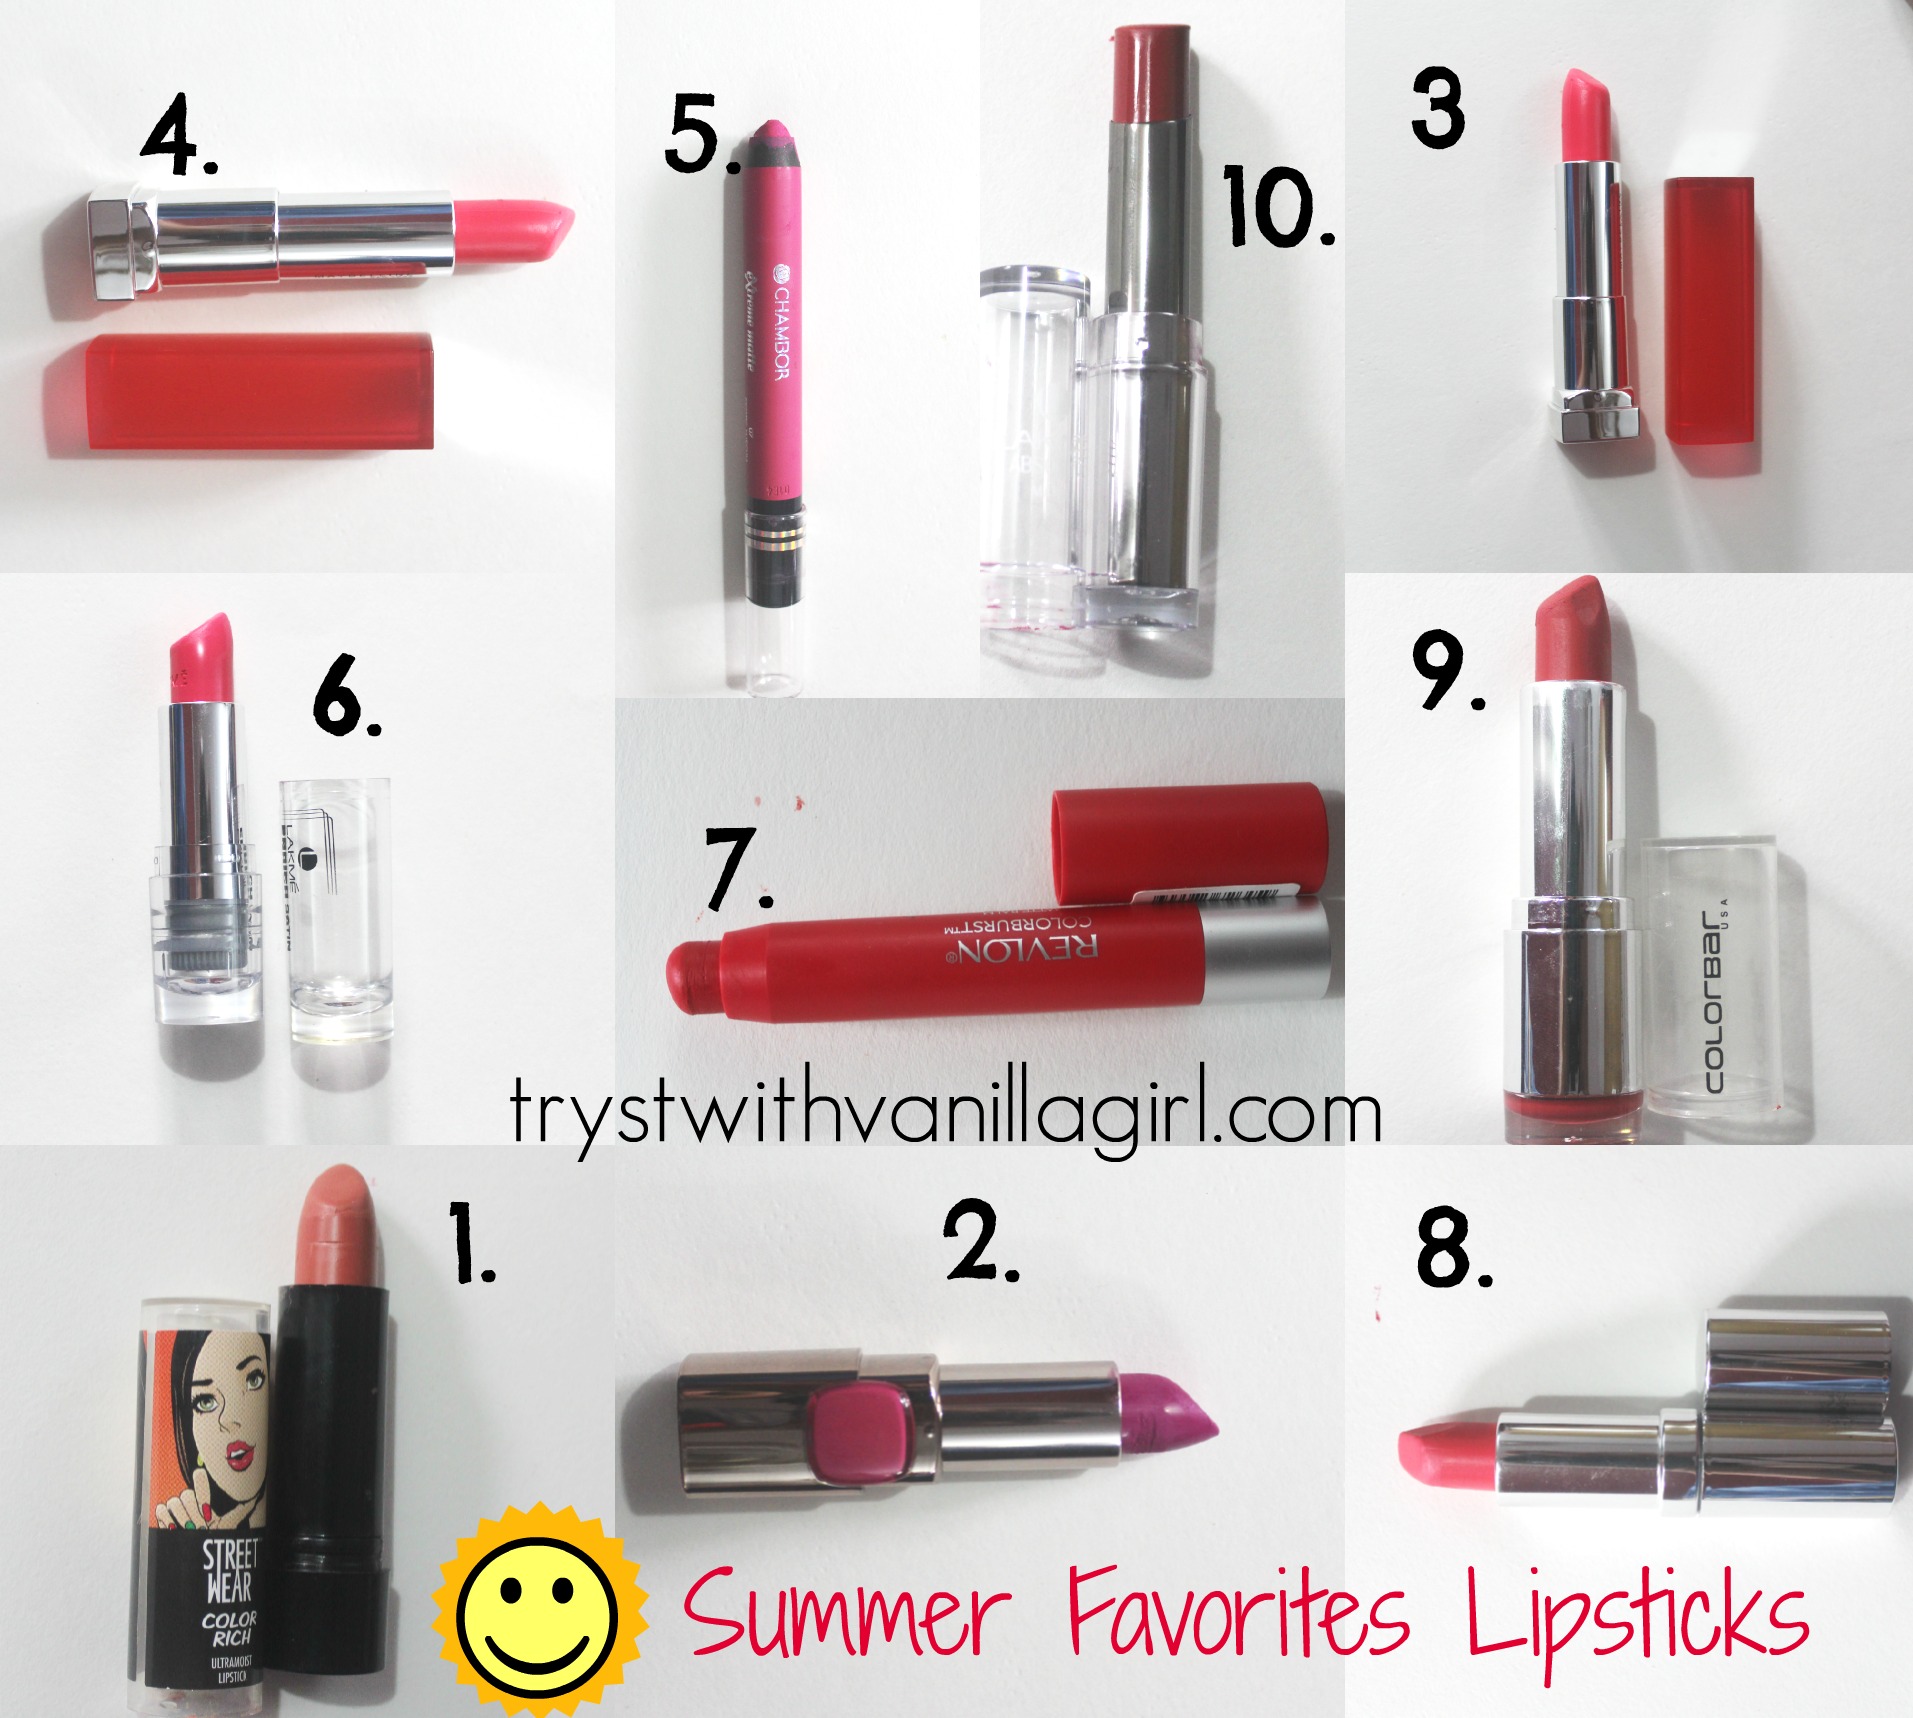 Drugstore Summer MakeUp Favorites,Top 10 Summer Lipsticks